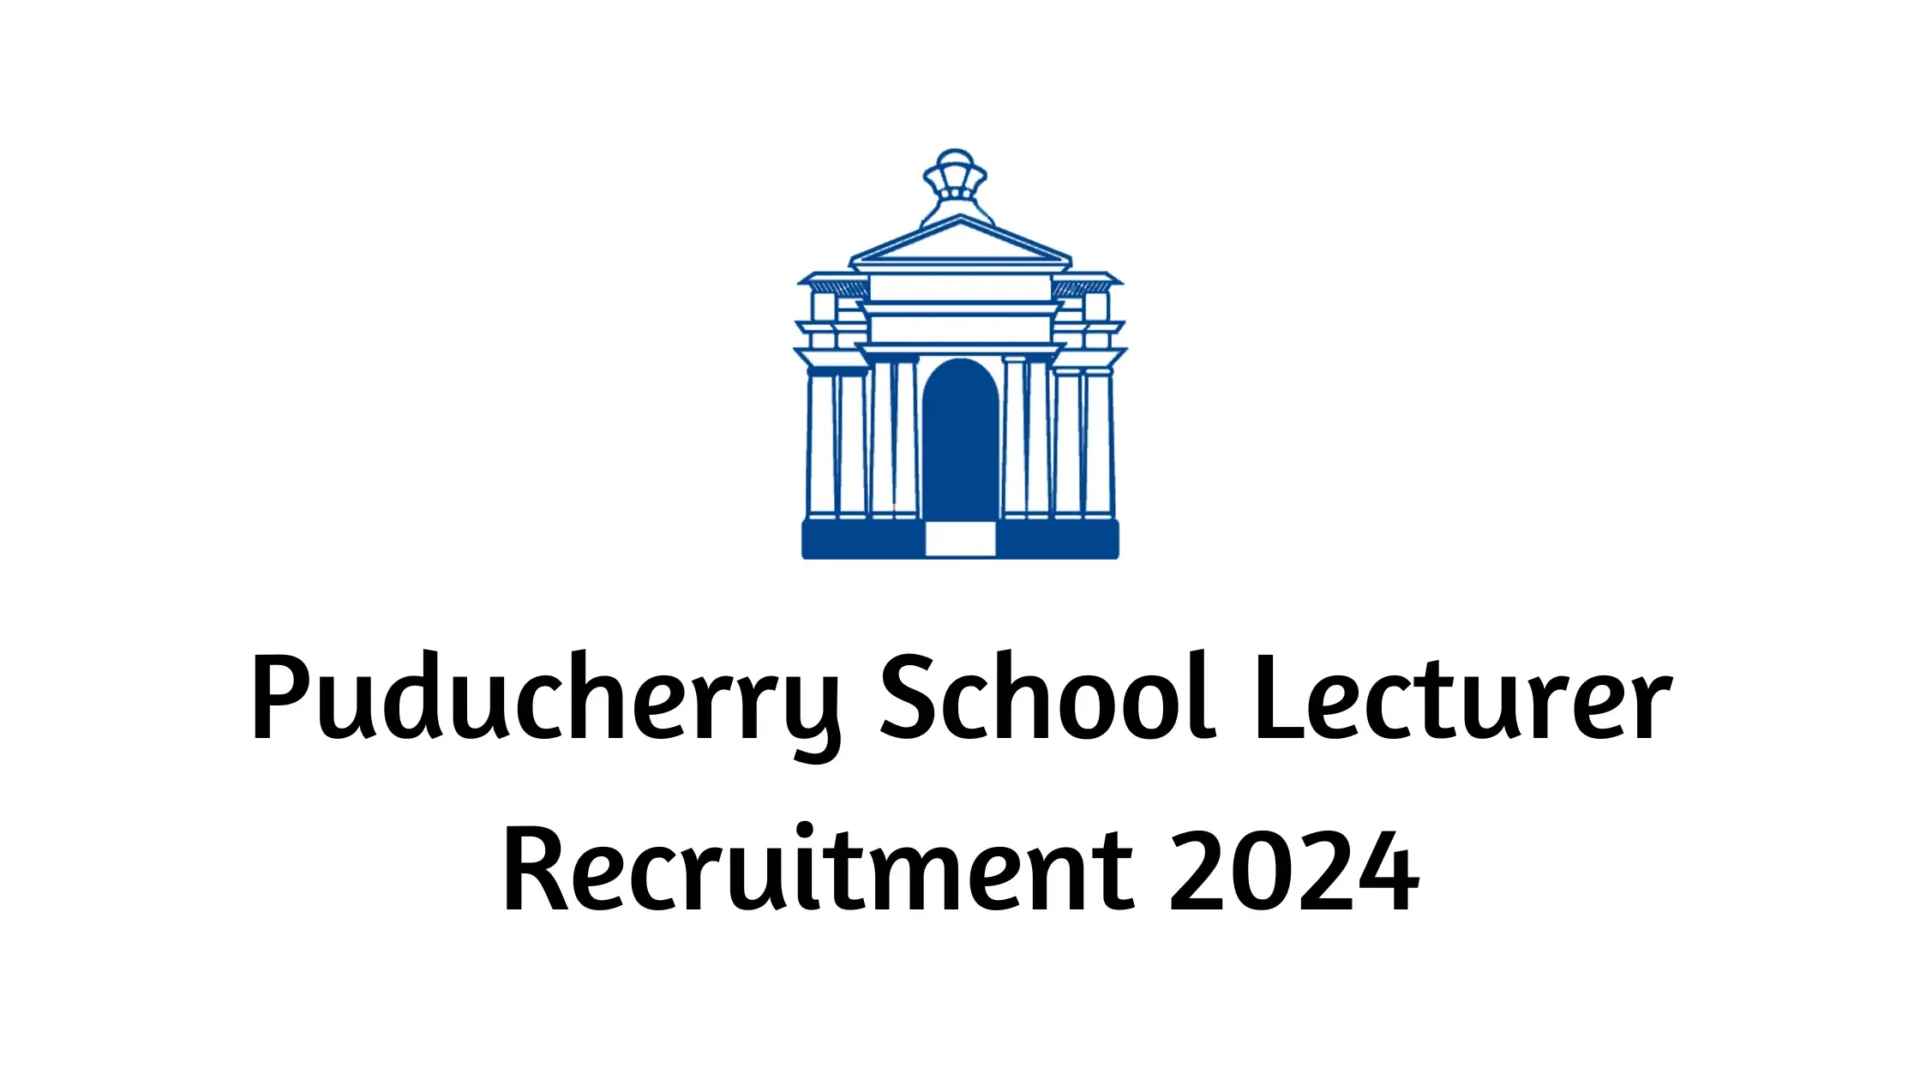 Puducherry School Lecturer Recruitment 2024